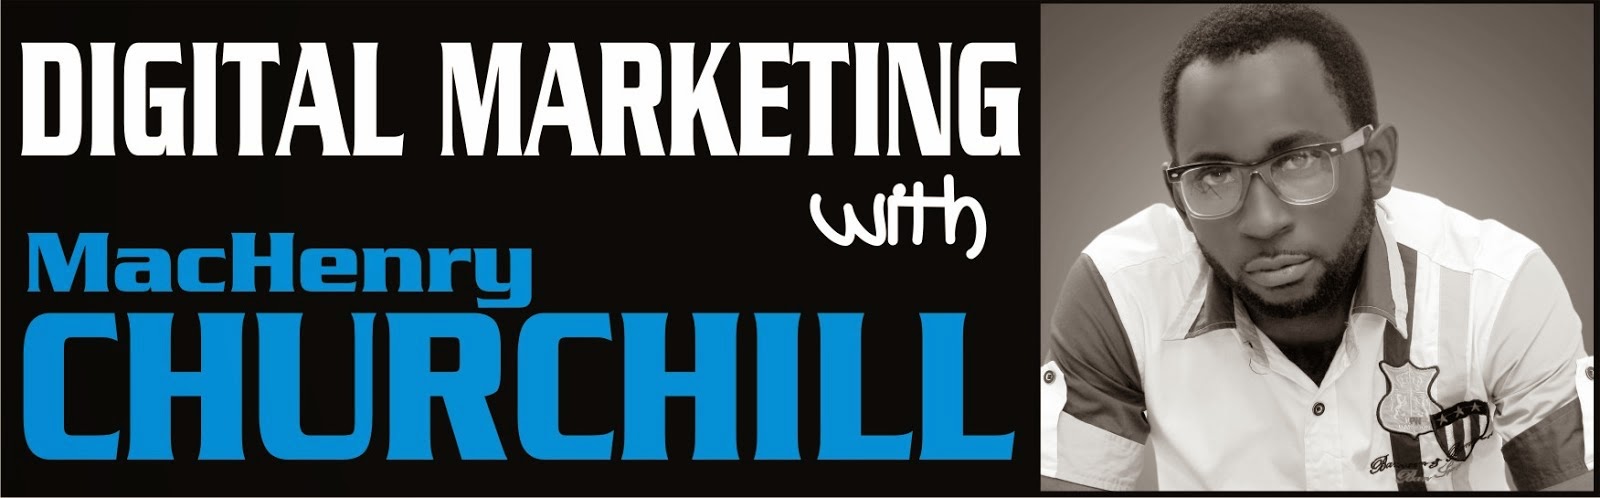 Digital Marketing With MacHenry Churchill